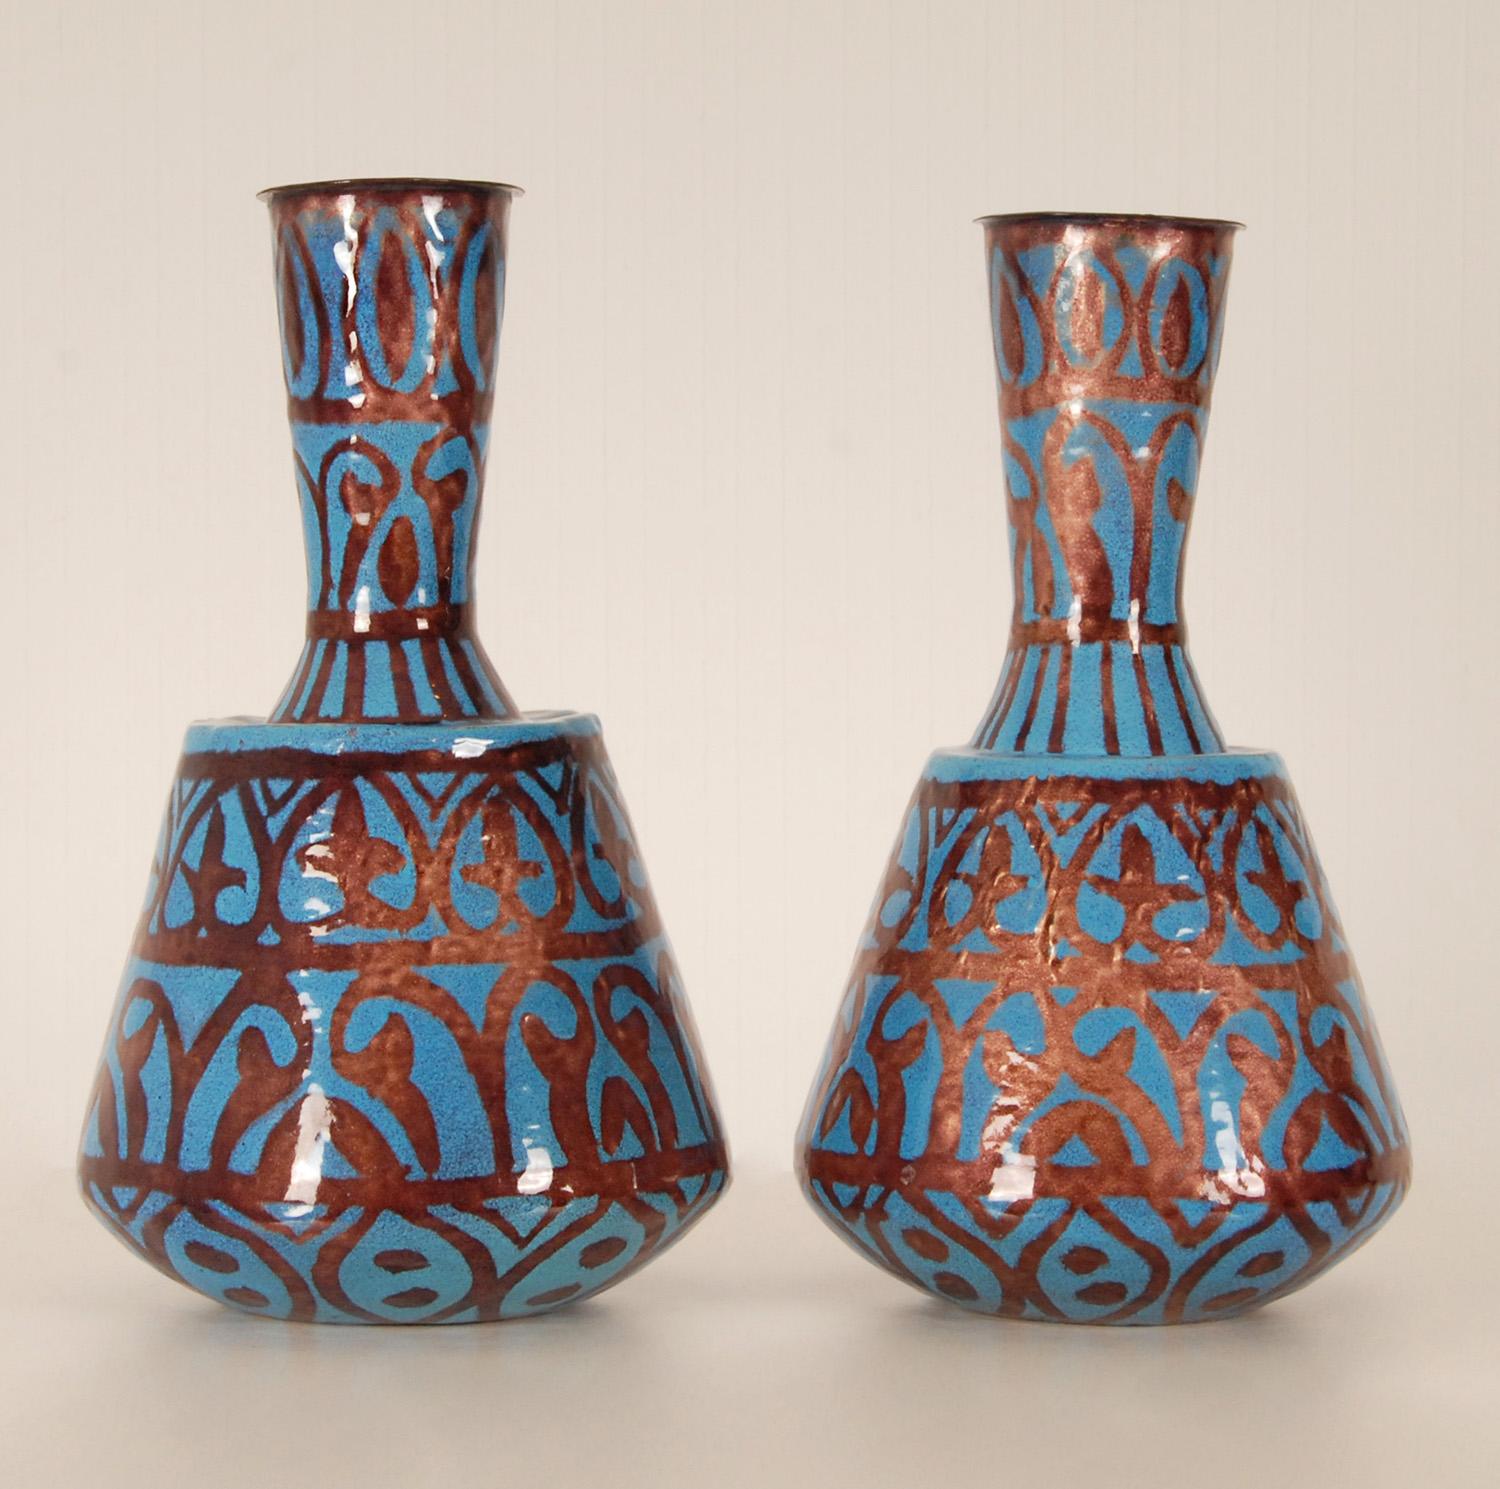 French Art Deco Vases Turqoise Blue and Iridescent Enamel on Copper Geometric Design Va For Sale